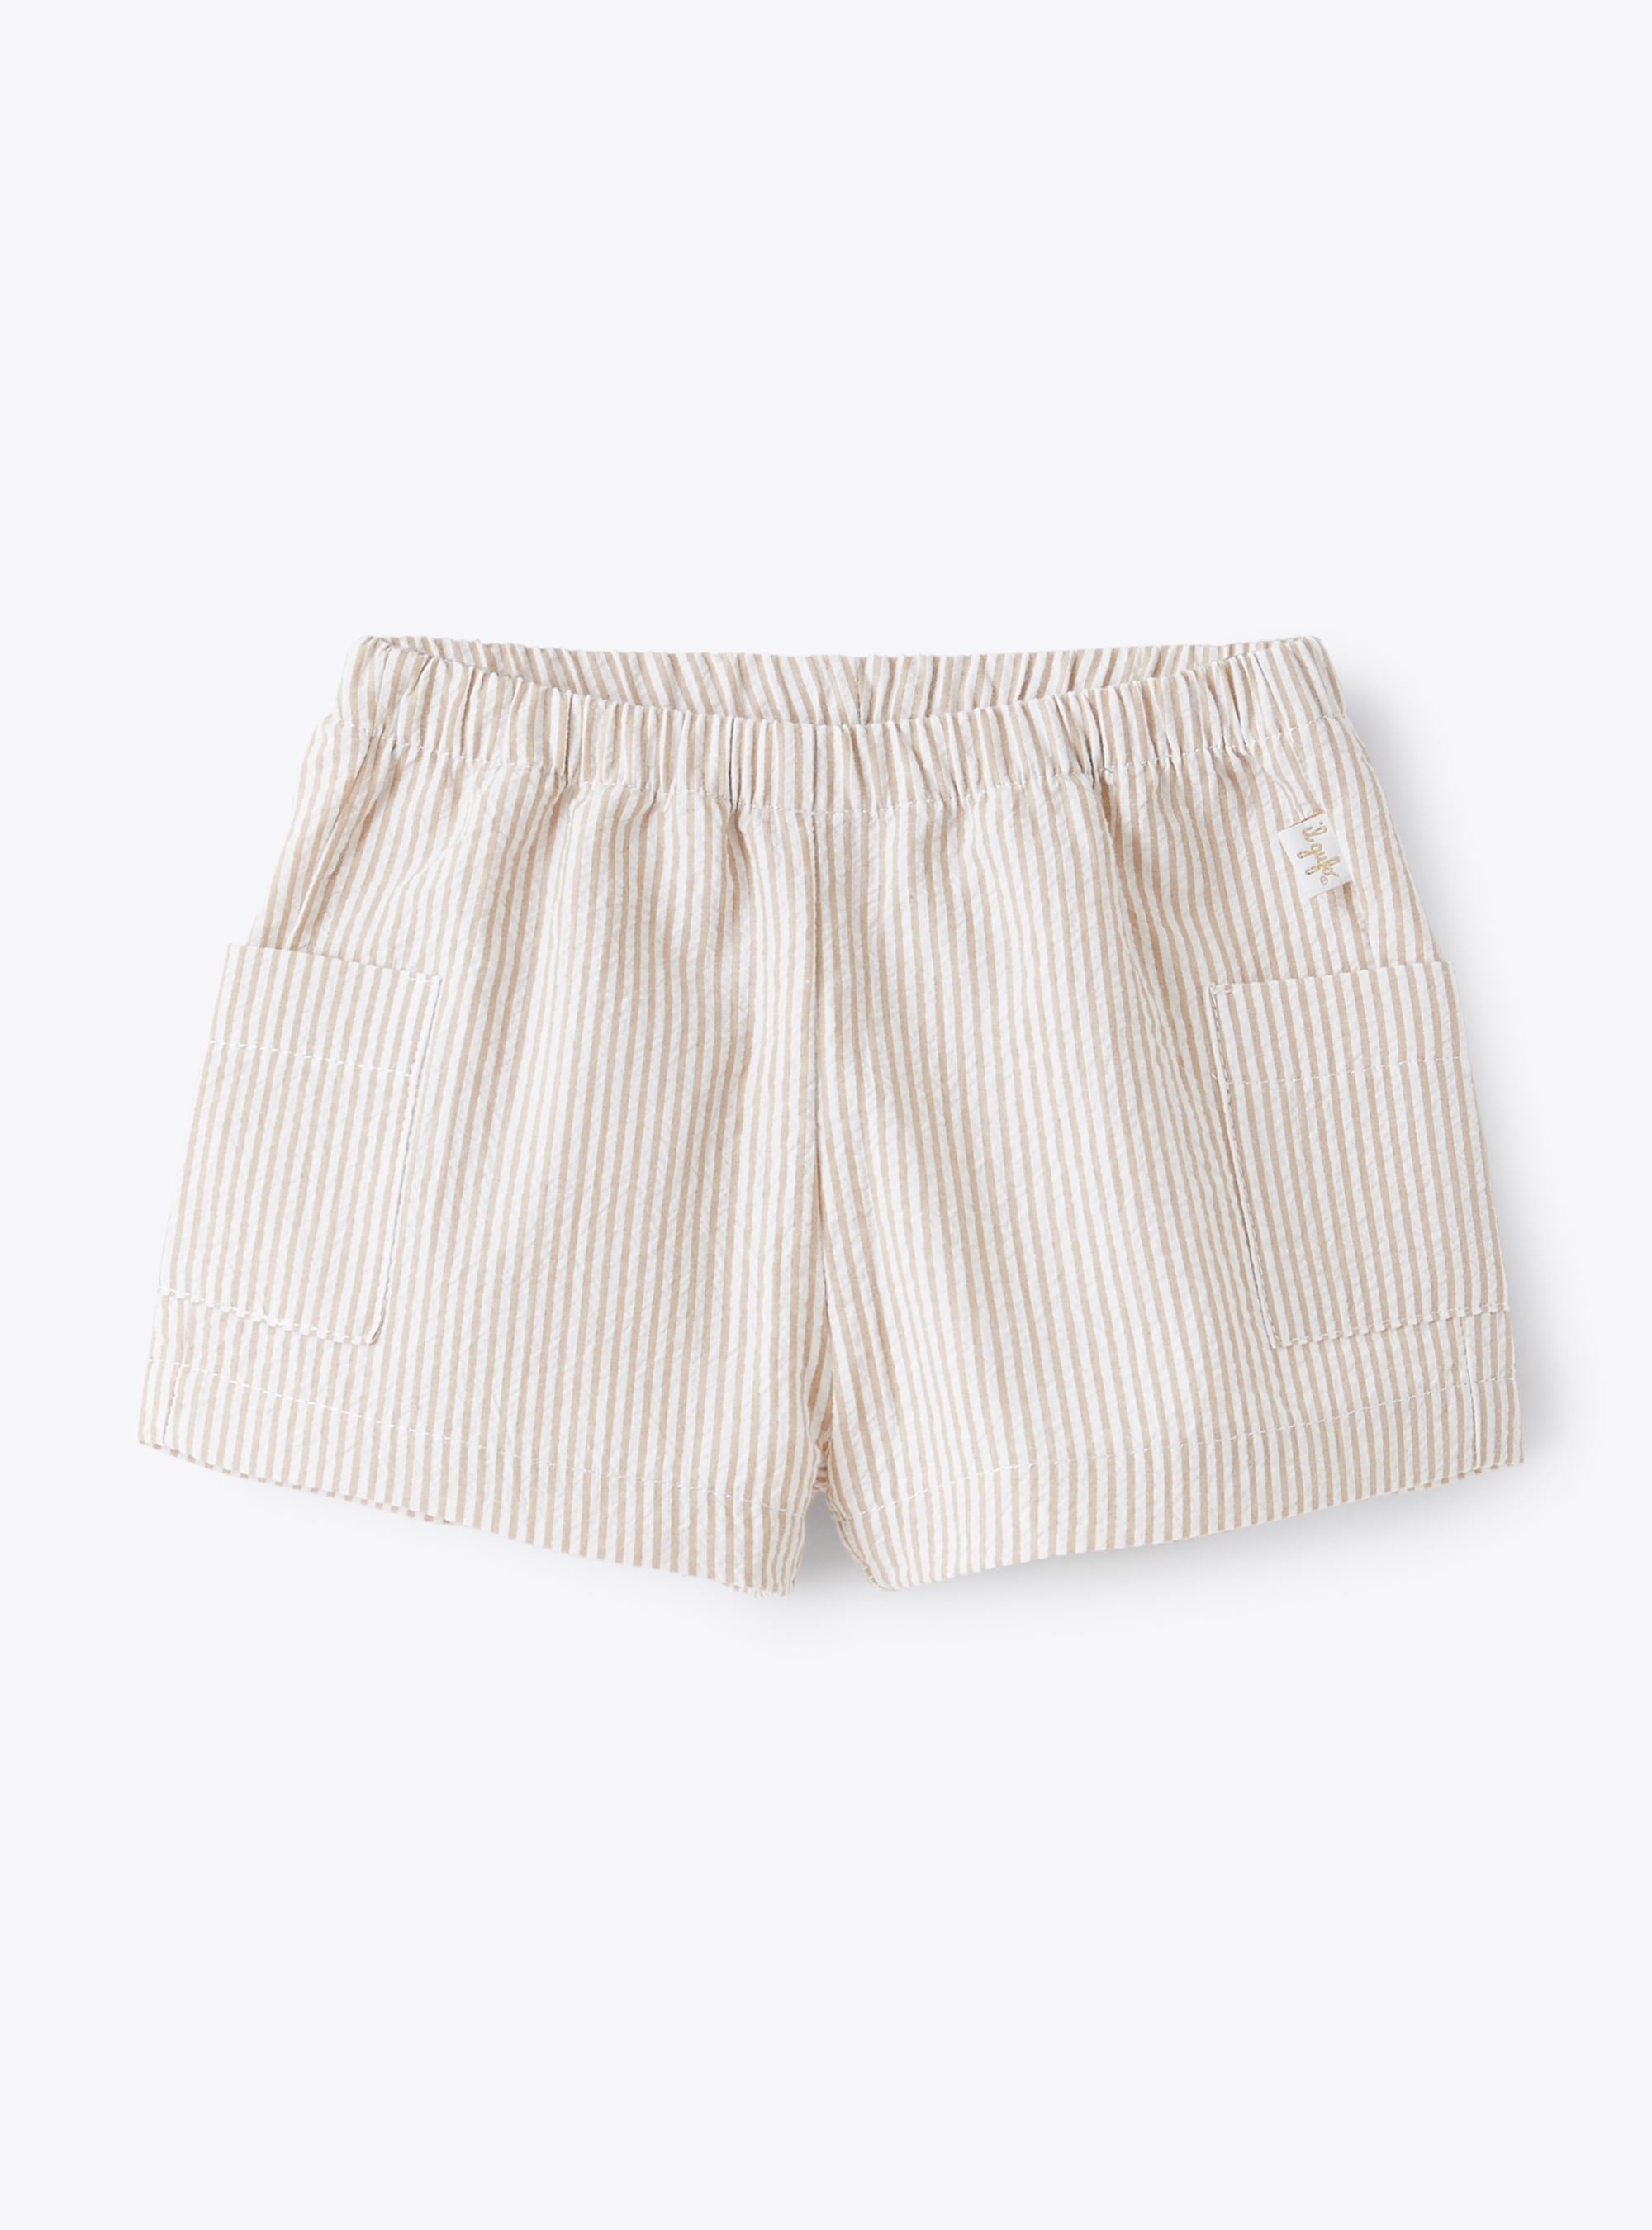 Cotton-seersucker shorts with beige stripes - Trousers - Il Gufo